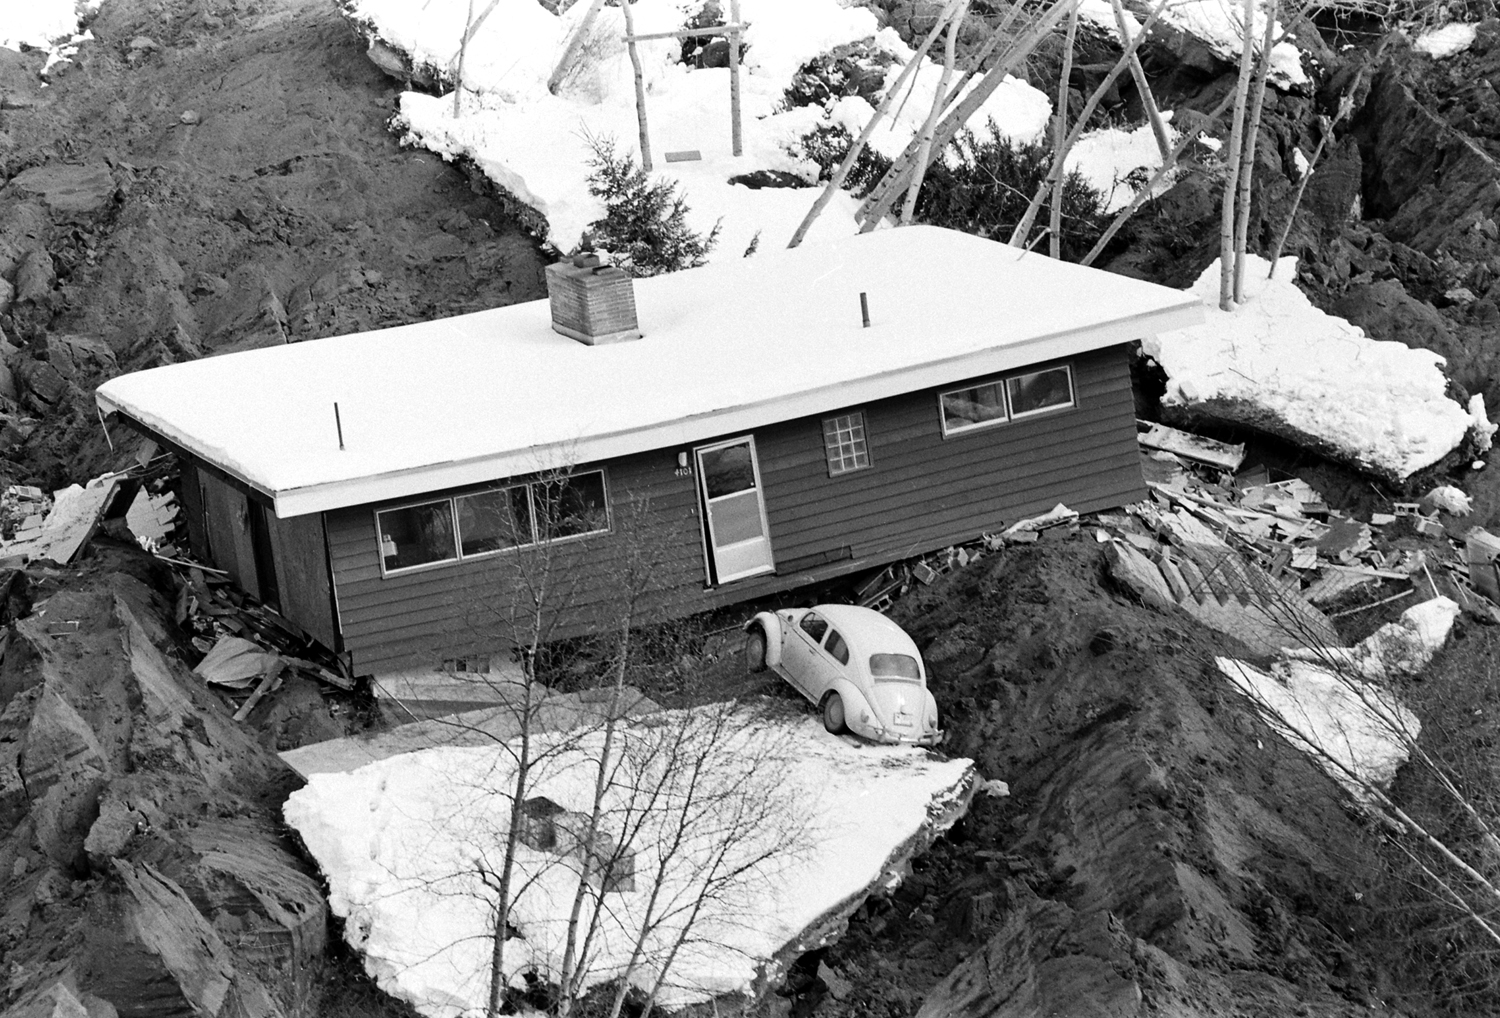 Aftermath of the 1964 Good Friday Earthquake, Alaska.